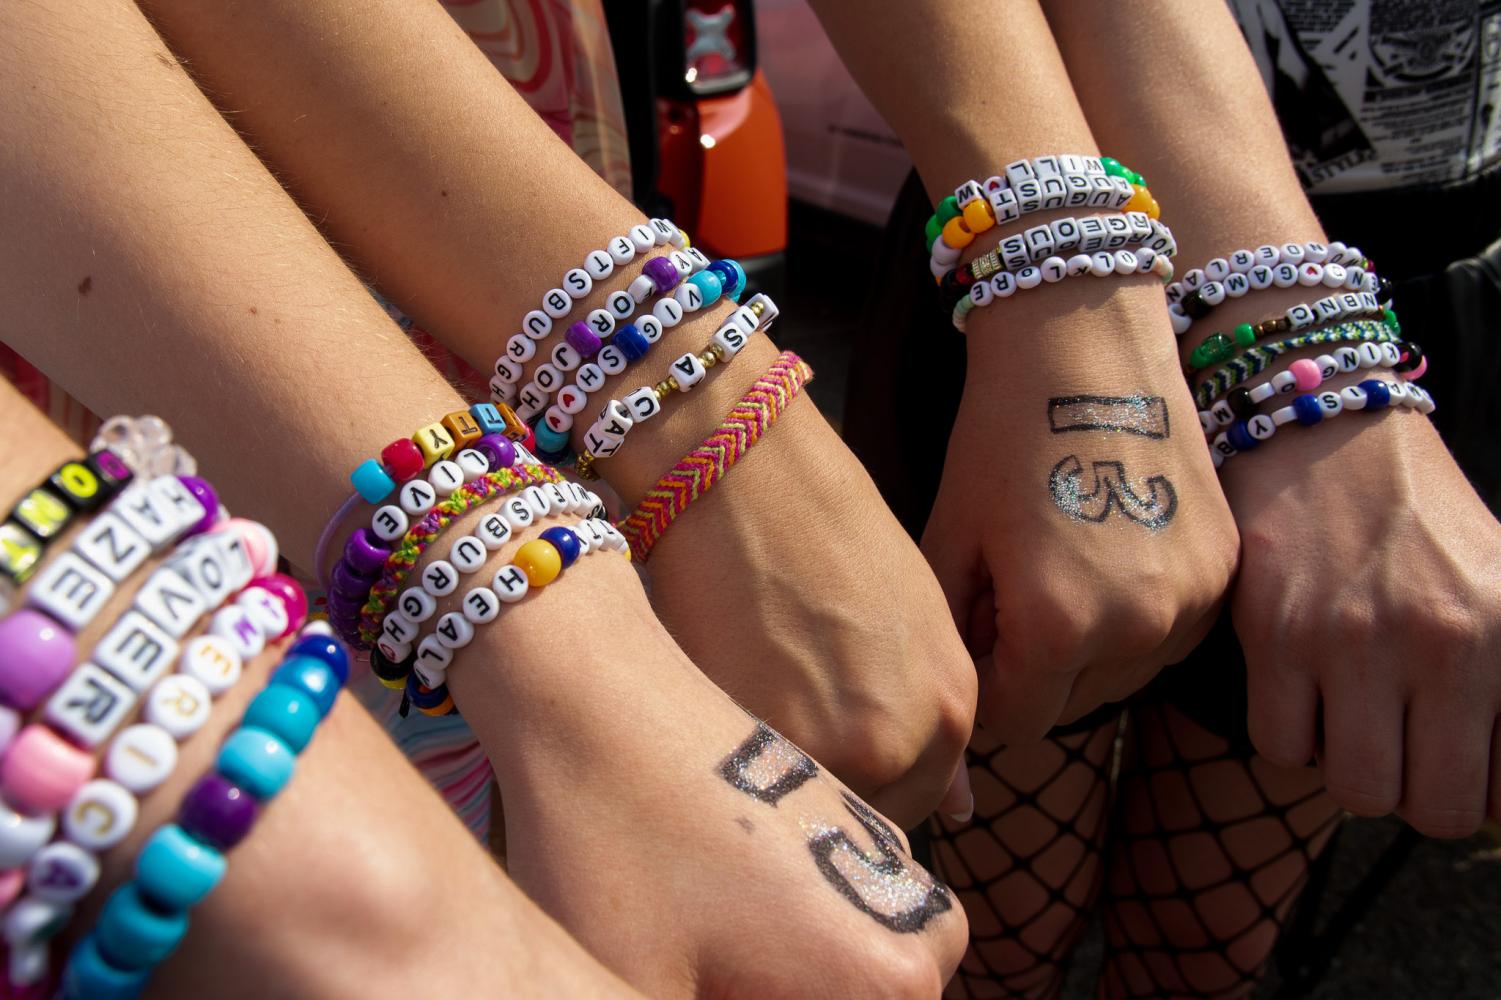 15 Taylor Swift friendship bracelets